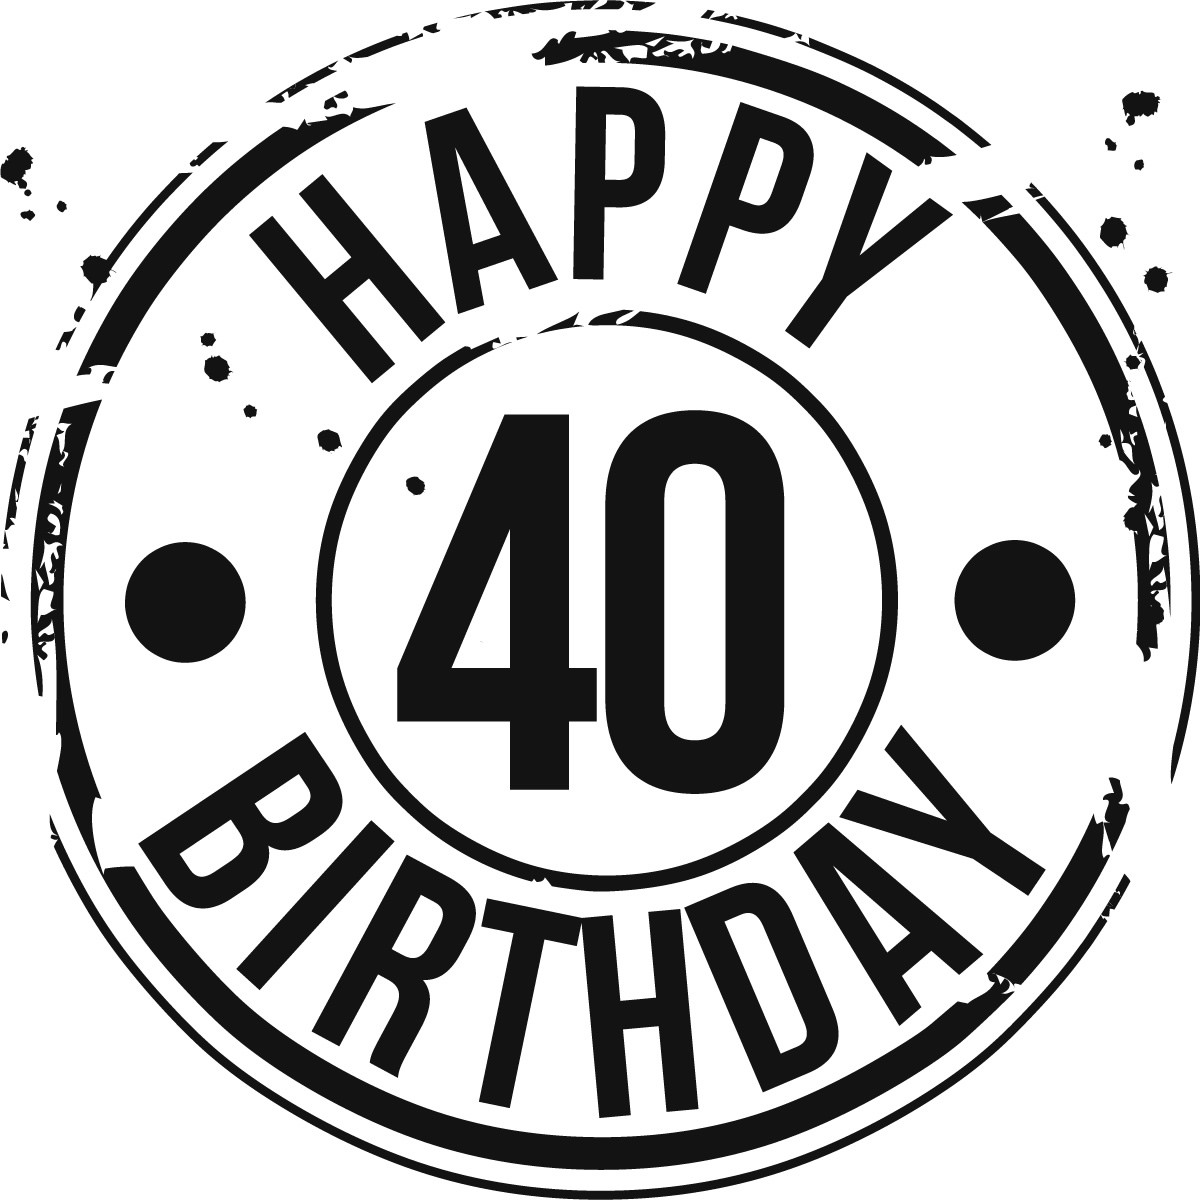 ... Free Happy 40th Birthday 